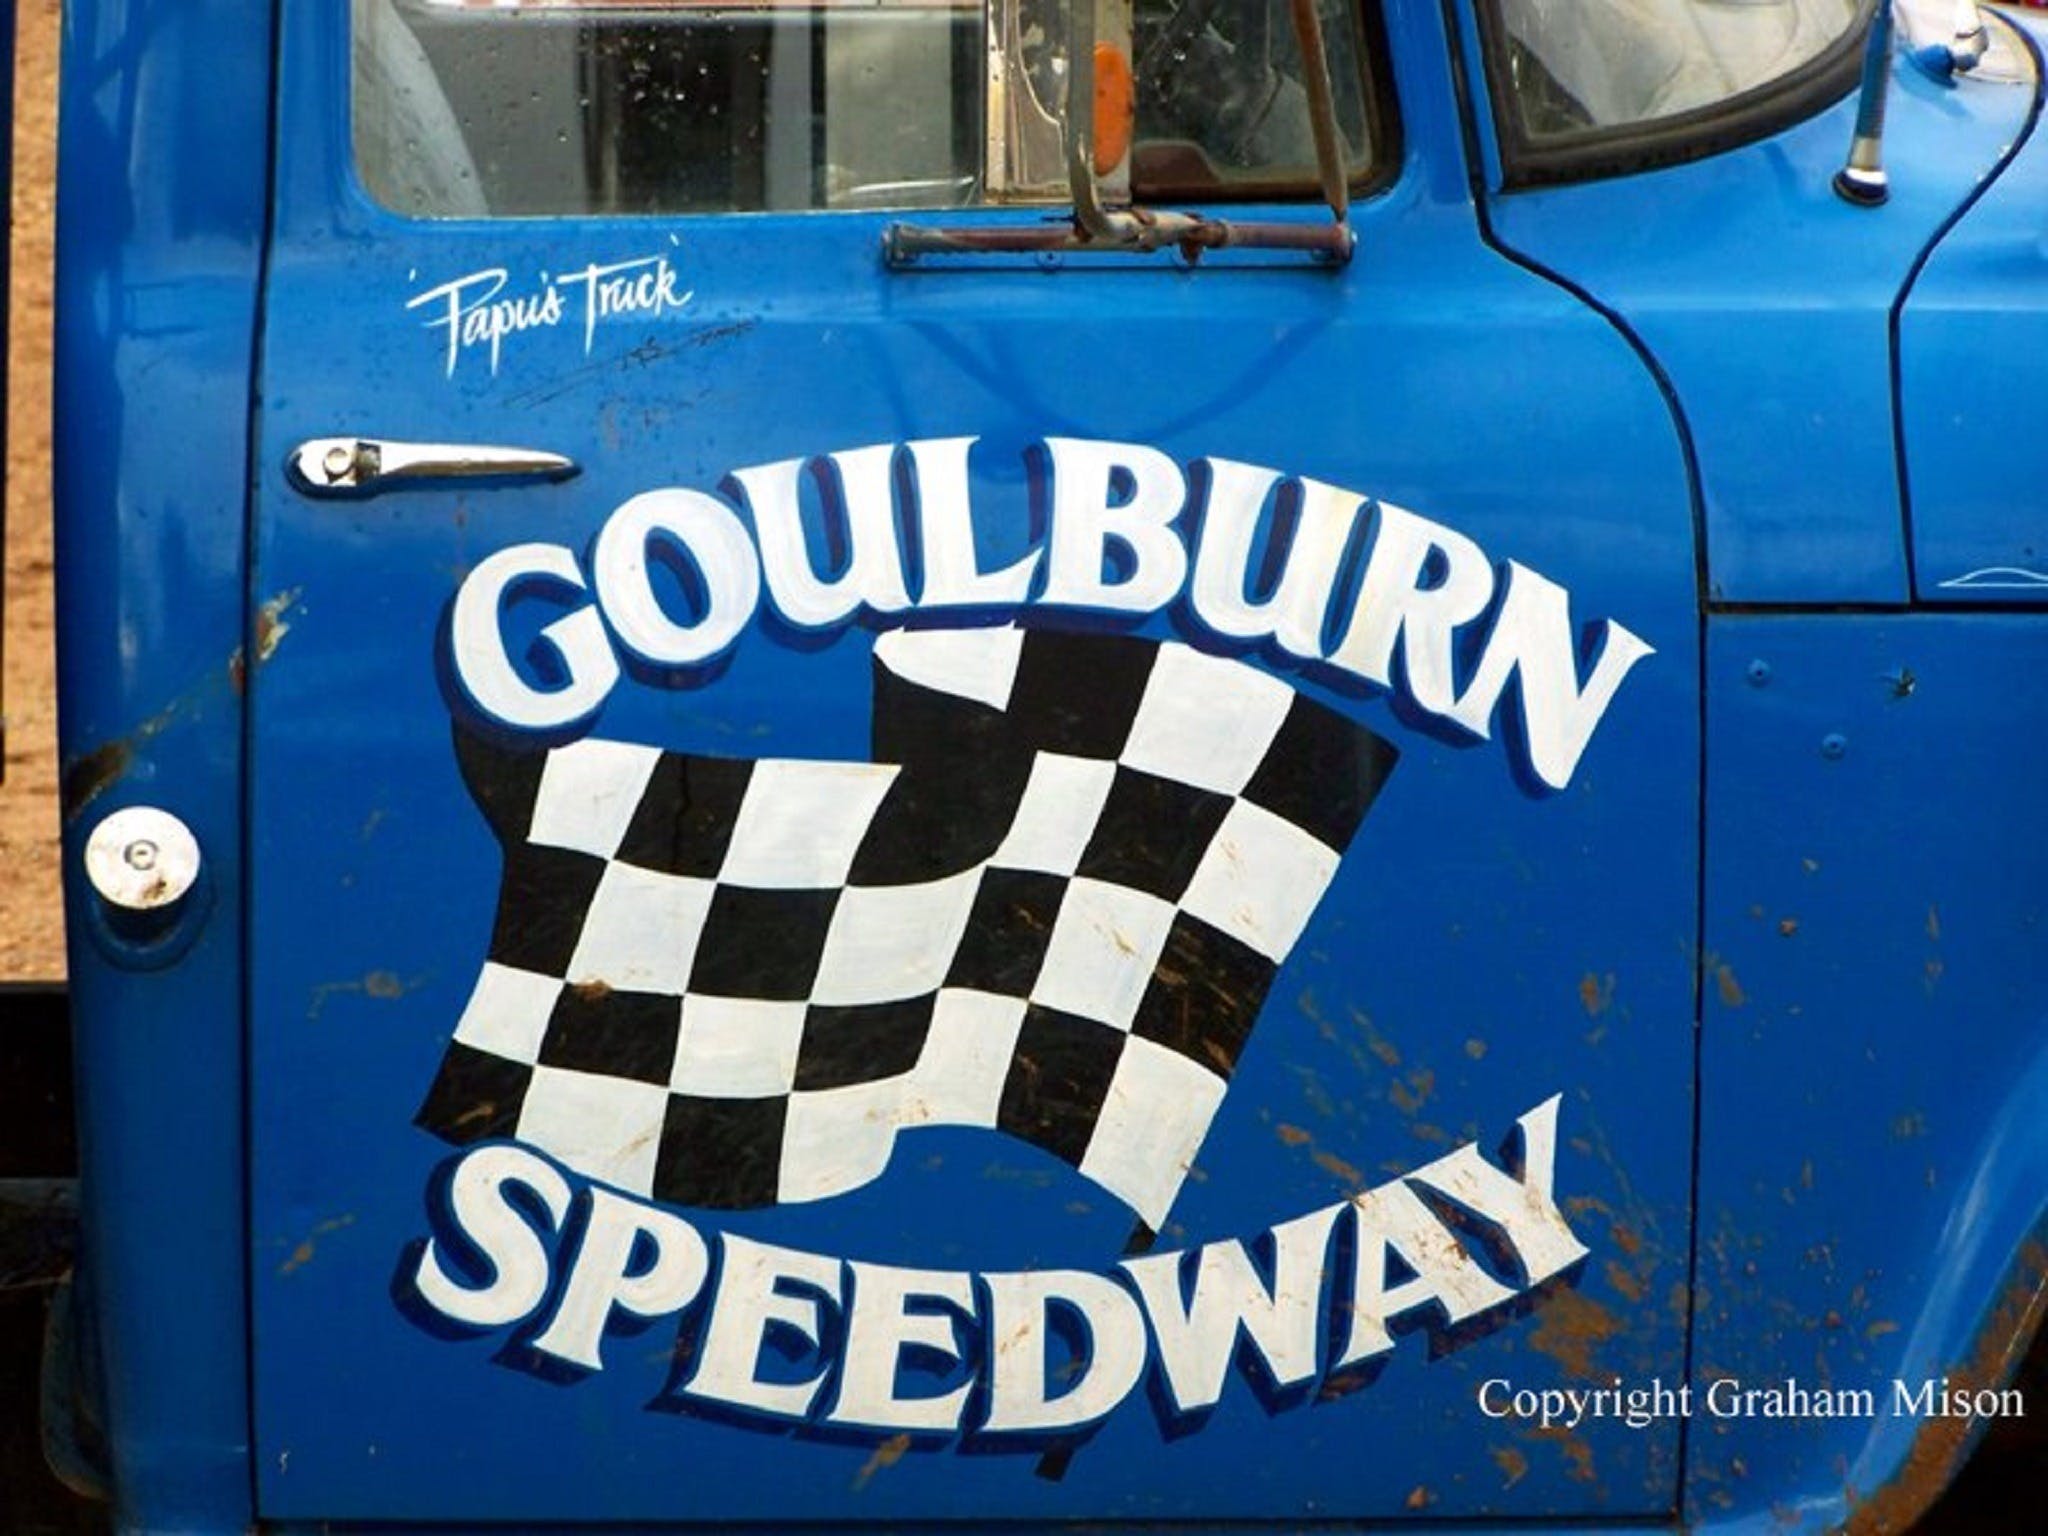 50 years of racing at Goulburn Speedway - WA Accommodation